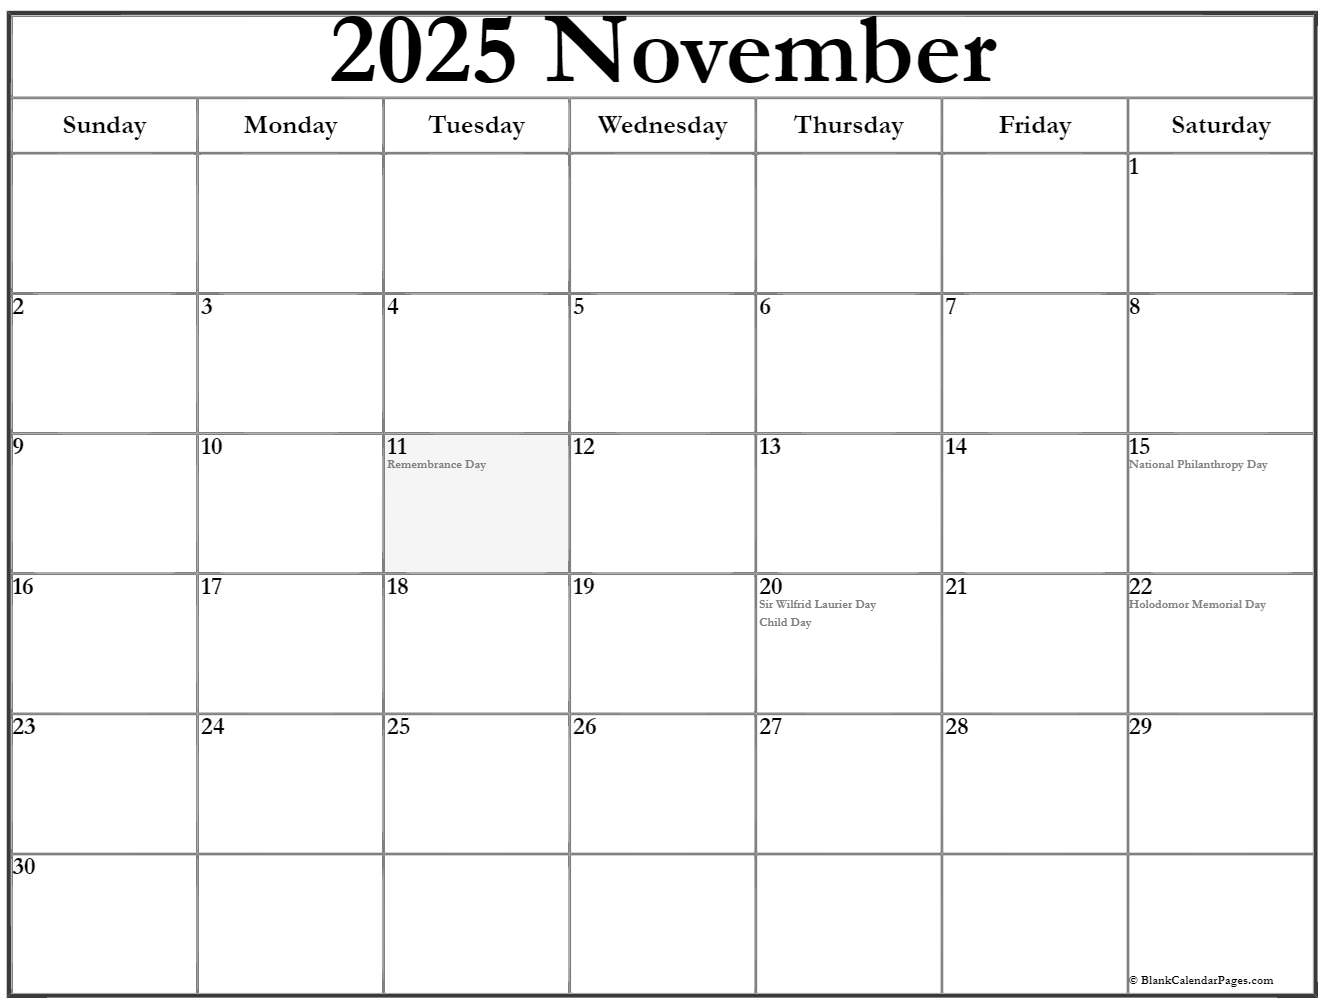 November 2025 with holidays calendar